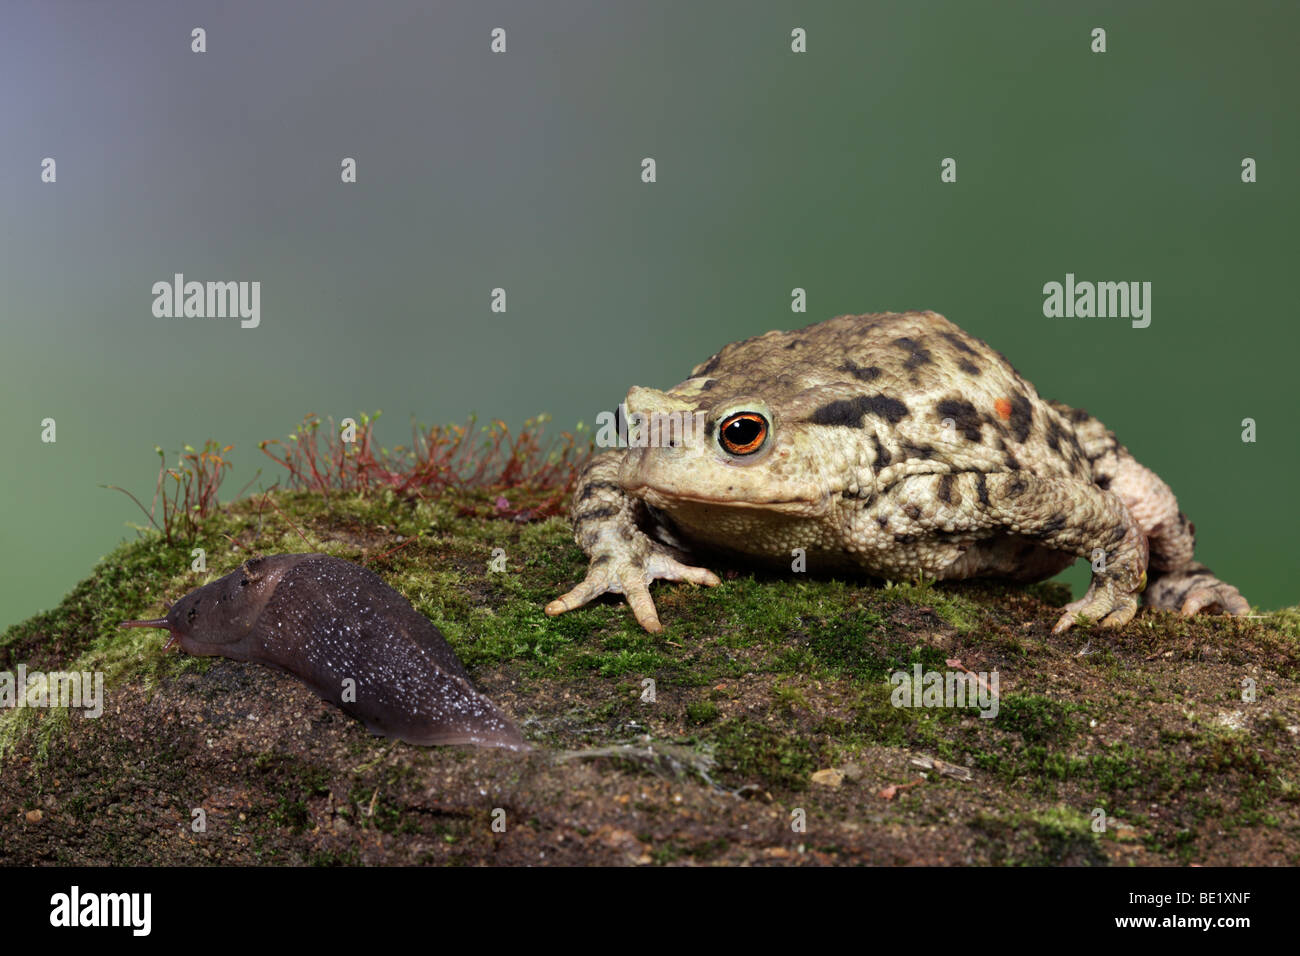 Common toad (Bufo bufo) with Slug Stock Photo